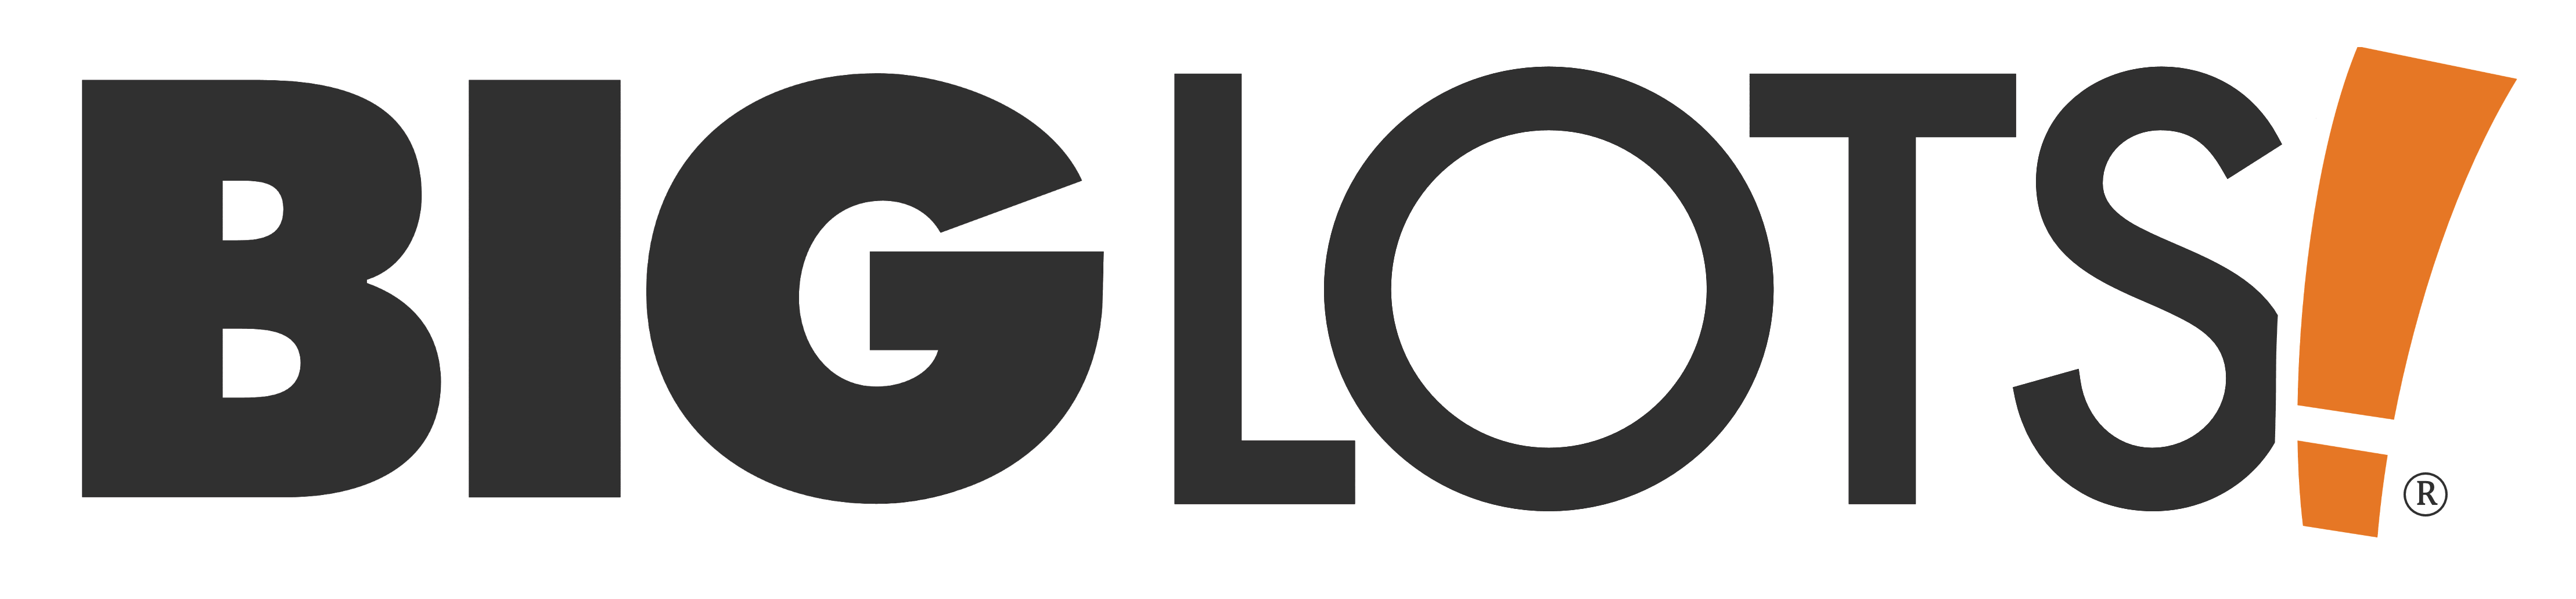 Big Lots Logo - Big Lots – Logos Download